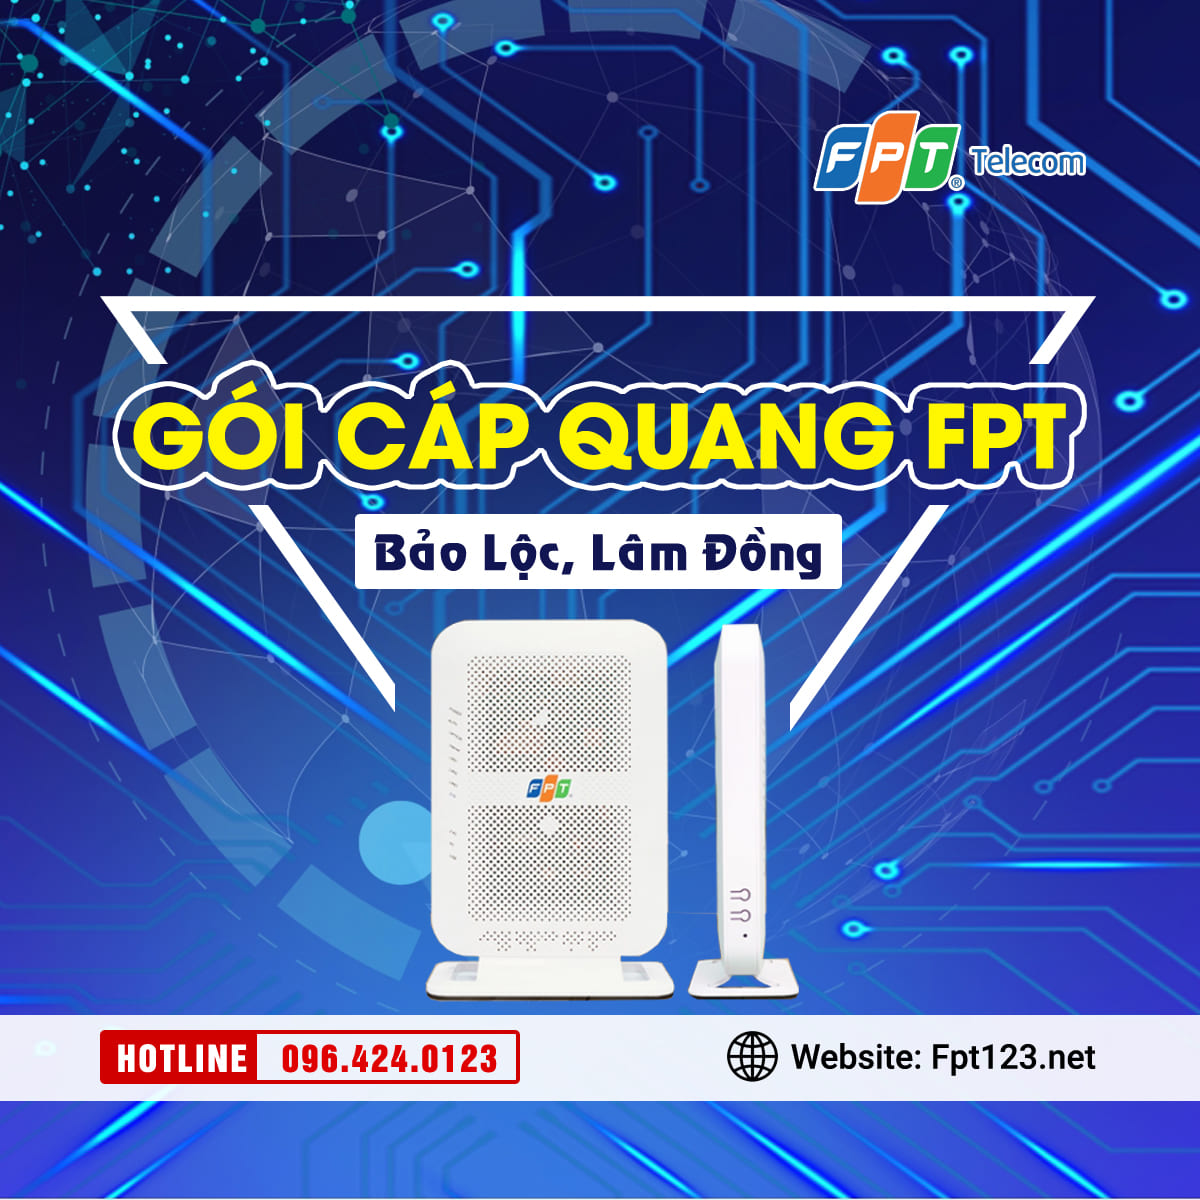 Gói cáp quang FPT Bảo Lộc, Lâm Đồng